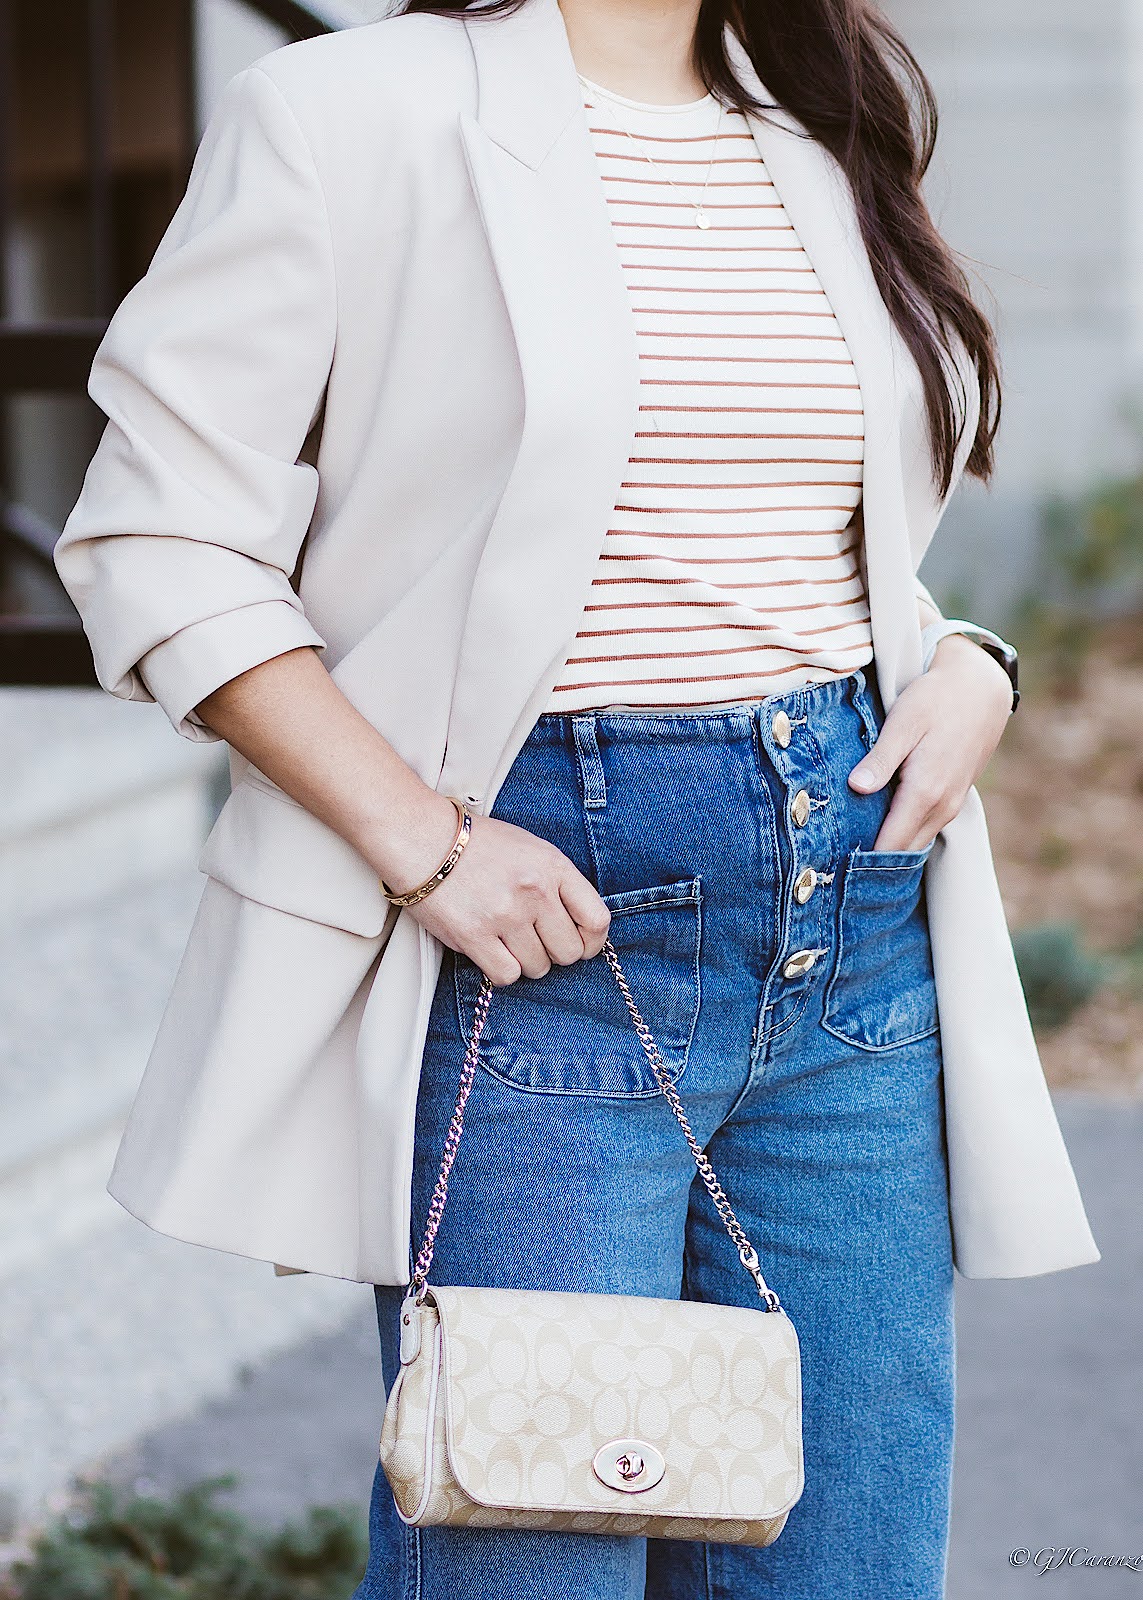 Zara Buttoned Jeans | Zara Oversize Blazer | Zara Stripe Top | Vince Camuto Pointed Toe Booties | Coach Bag | Petite Fashion | Office Look